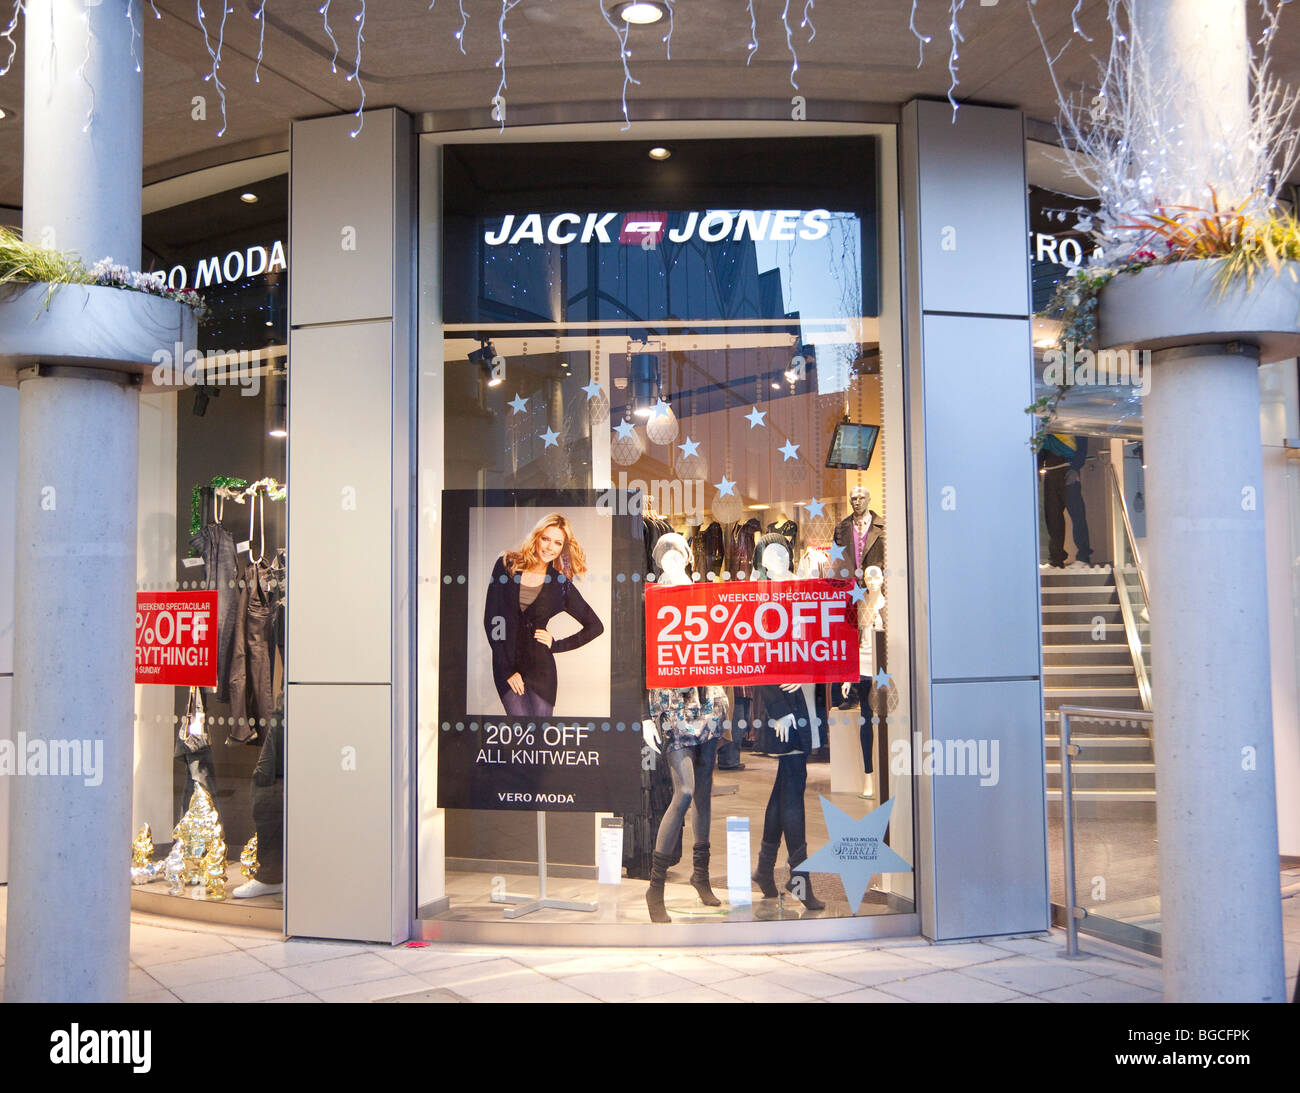 Jack & Jones shop Stock Photo - Alamy